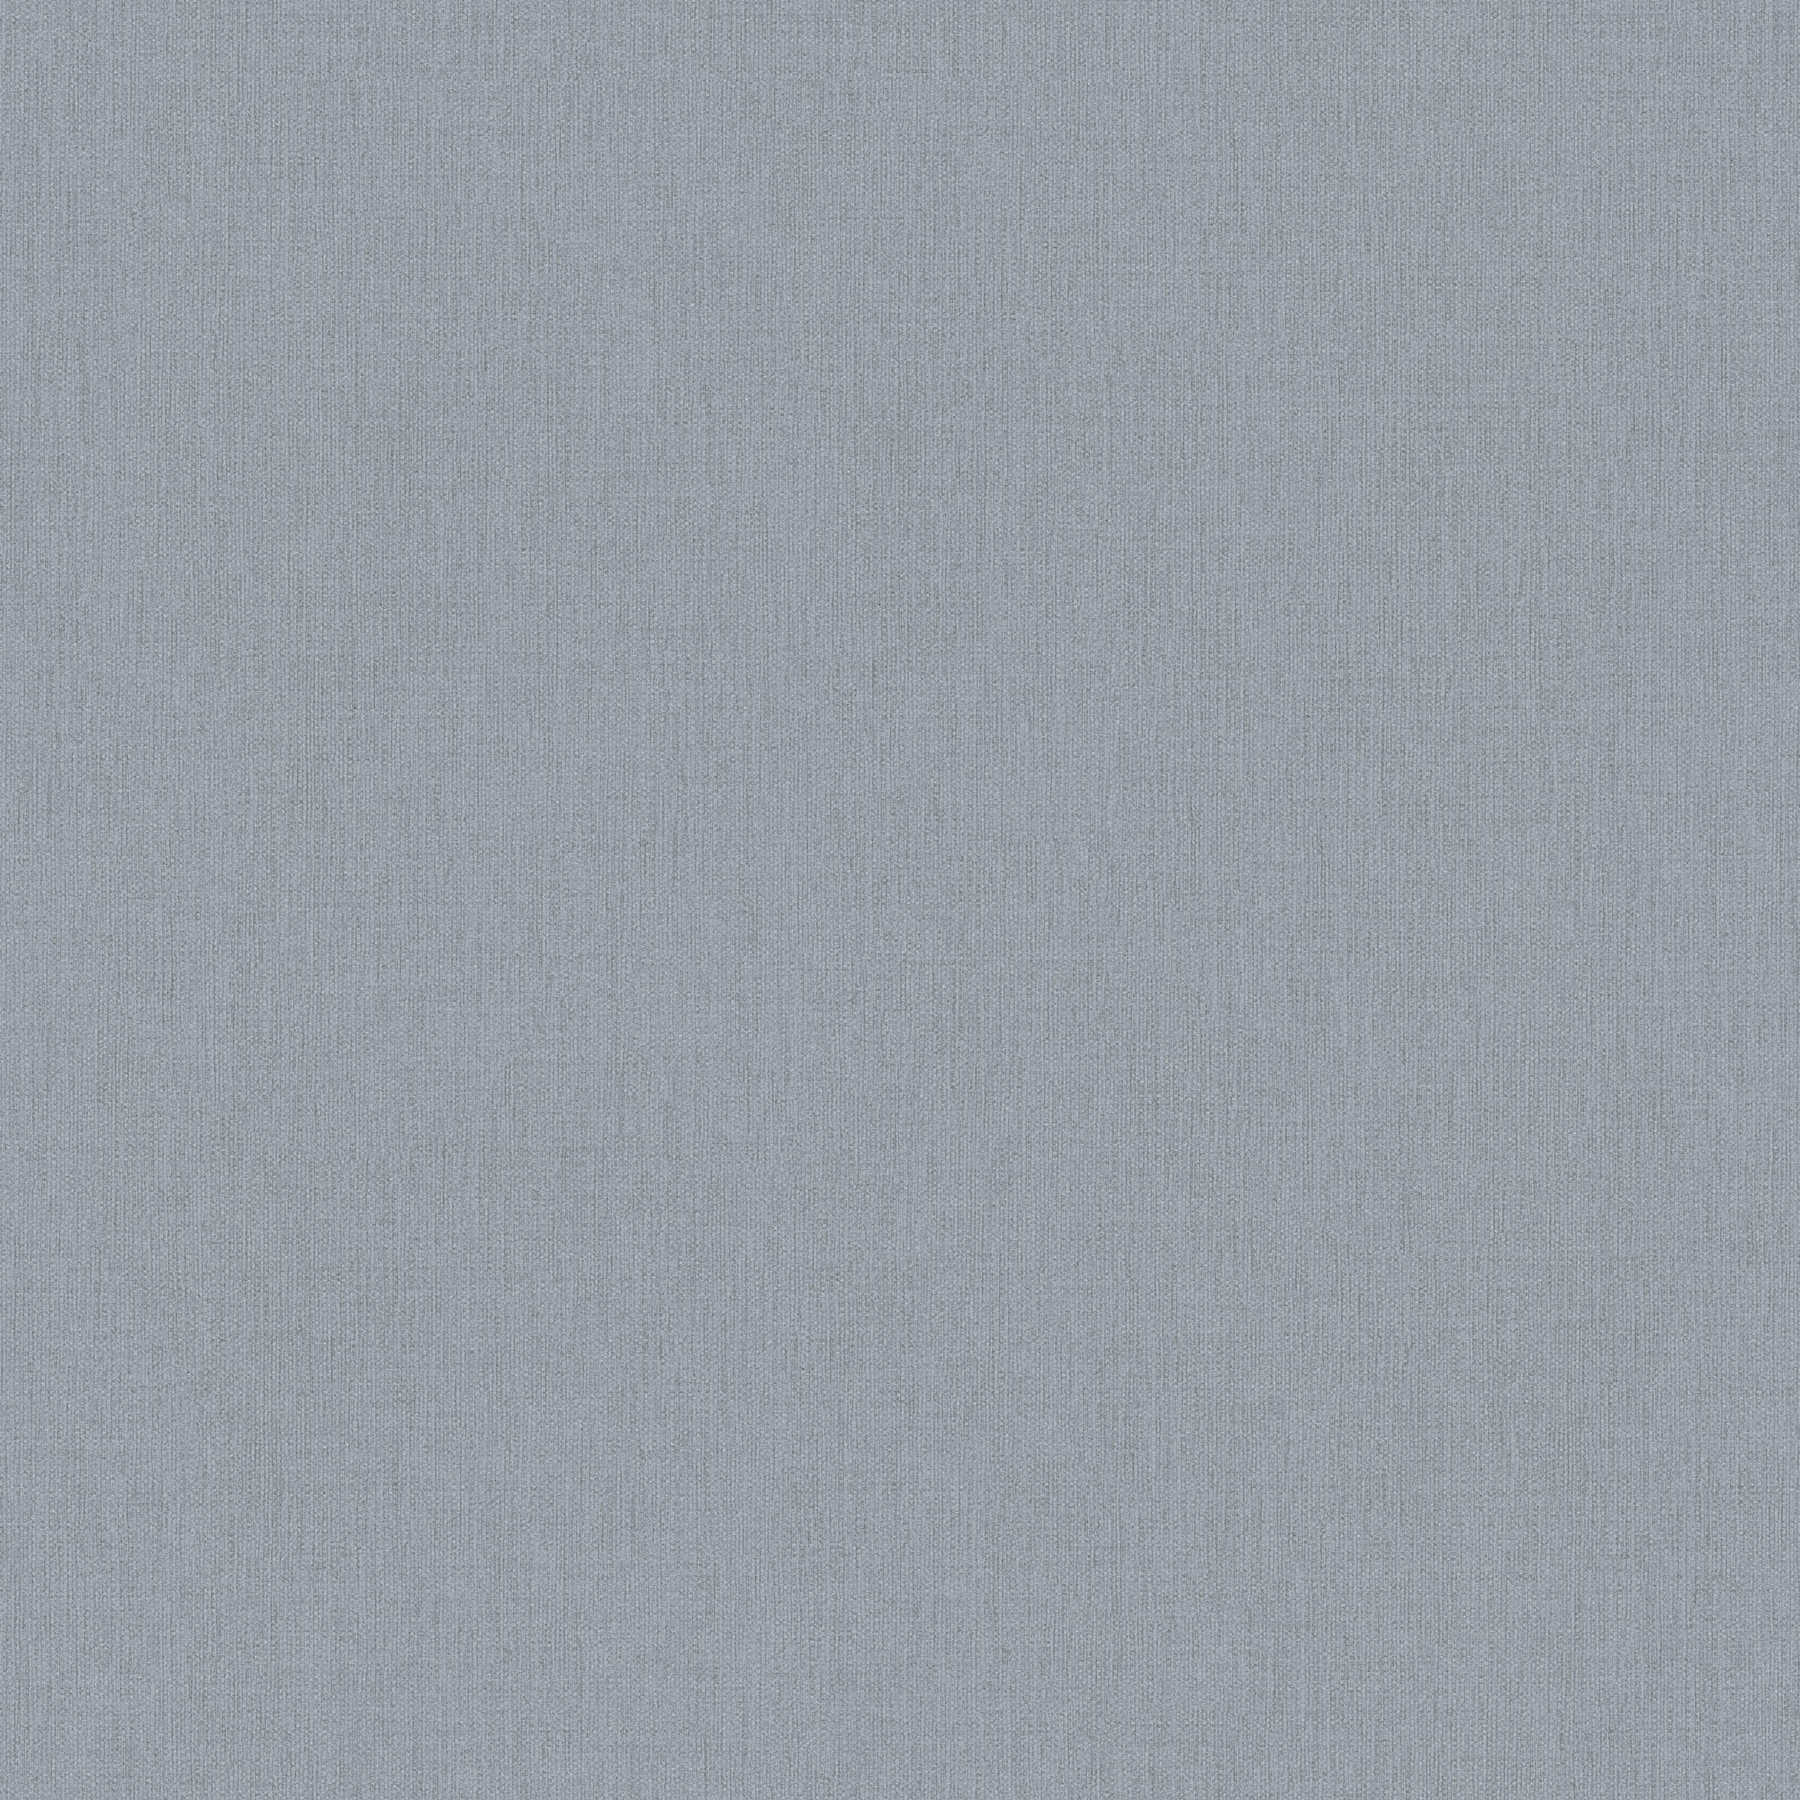 Papel pintado de estilo rústico gris con aspecto textil moteado
